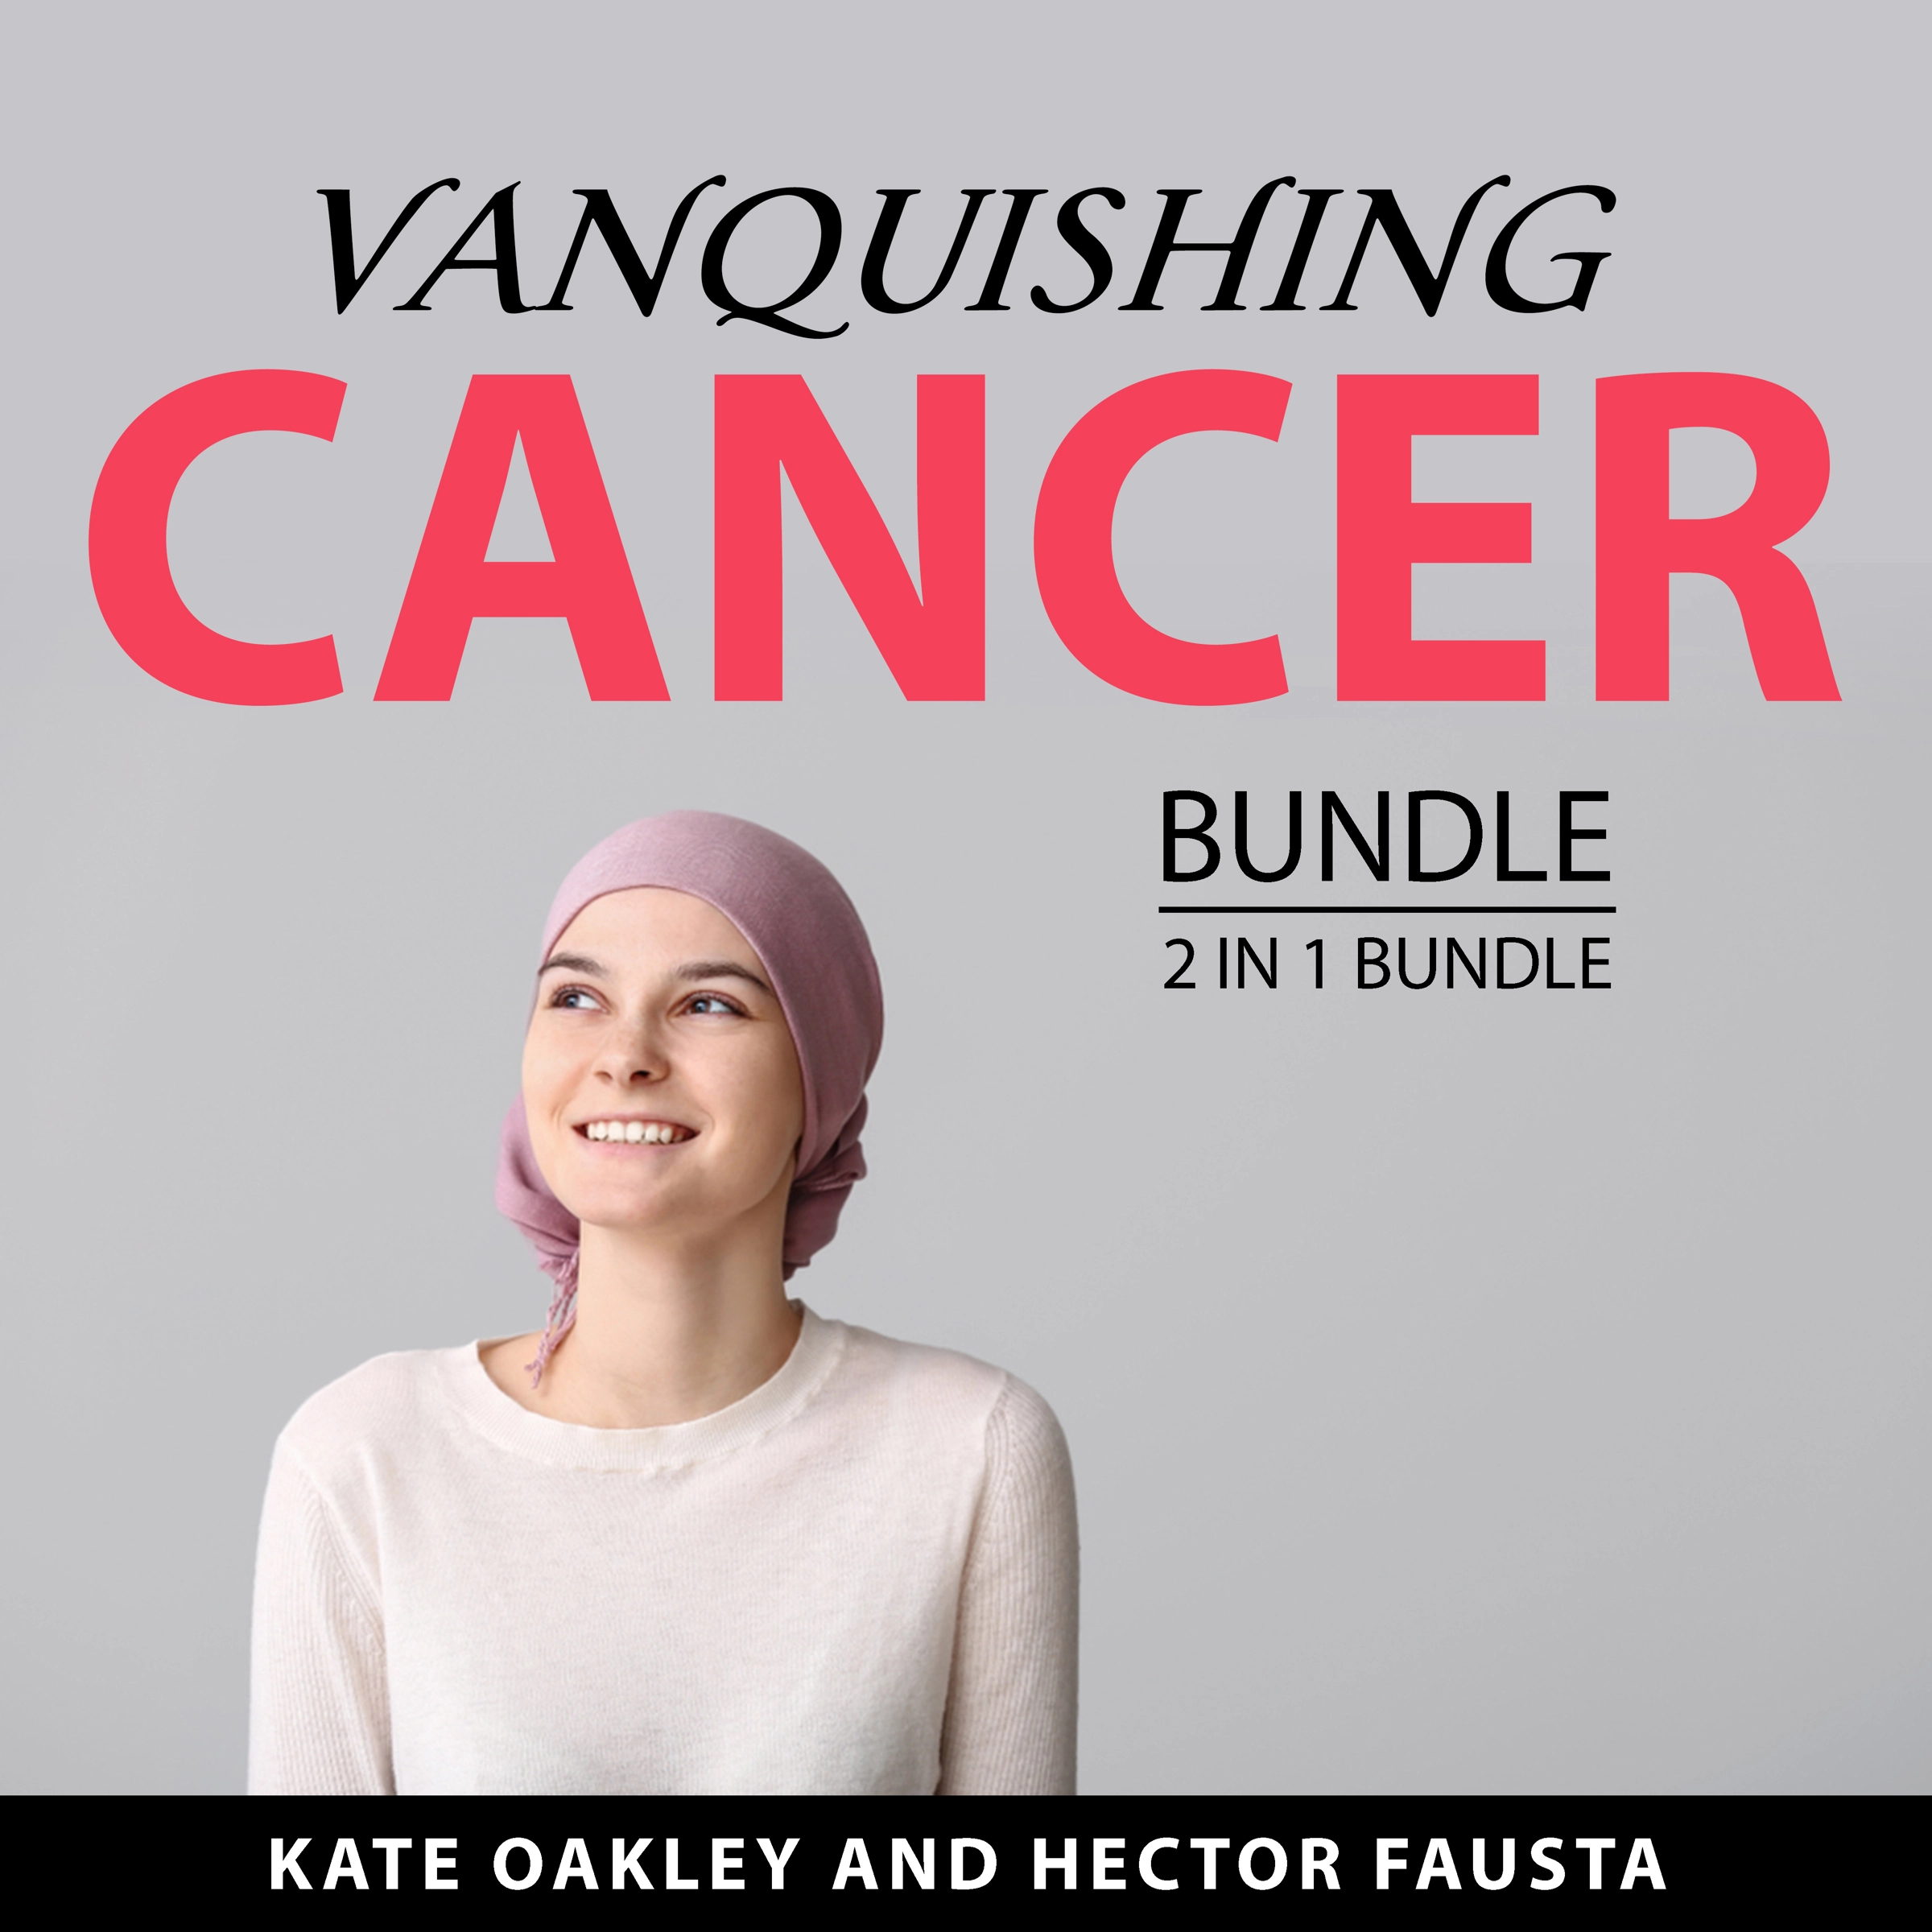 Vanquishing Cancer Bundle, 2 in 1 Bundle Audiobook by Hector Fausta